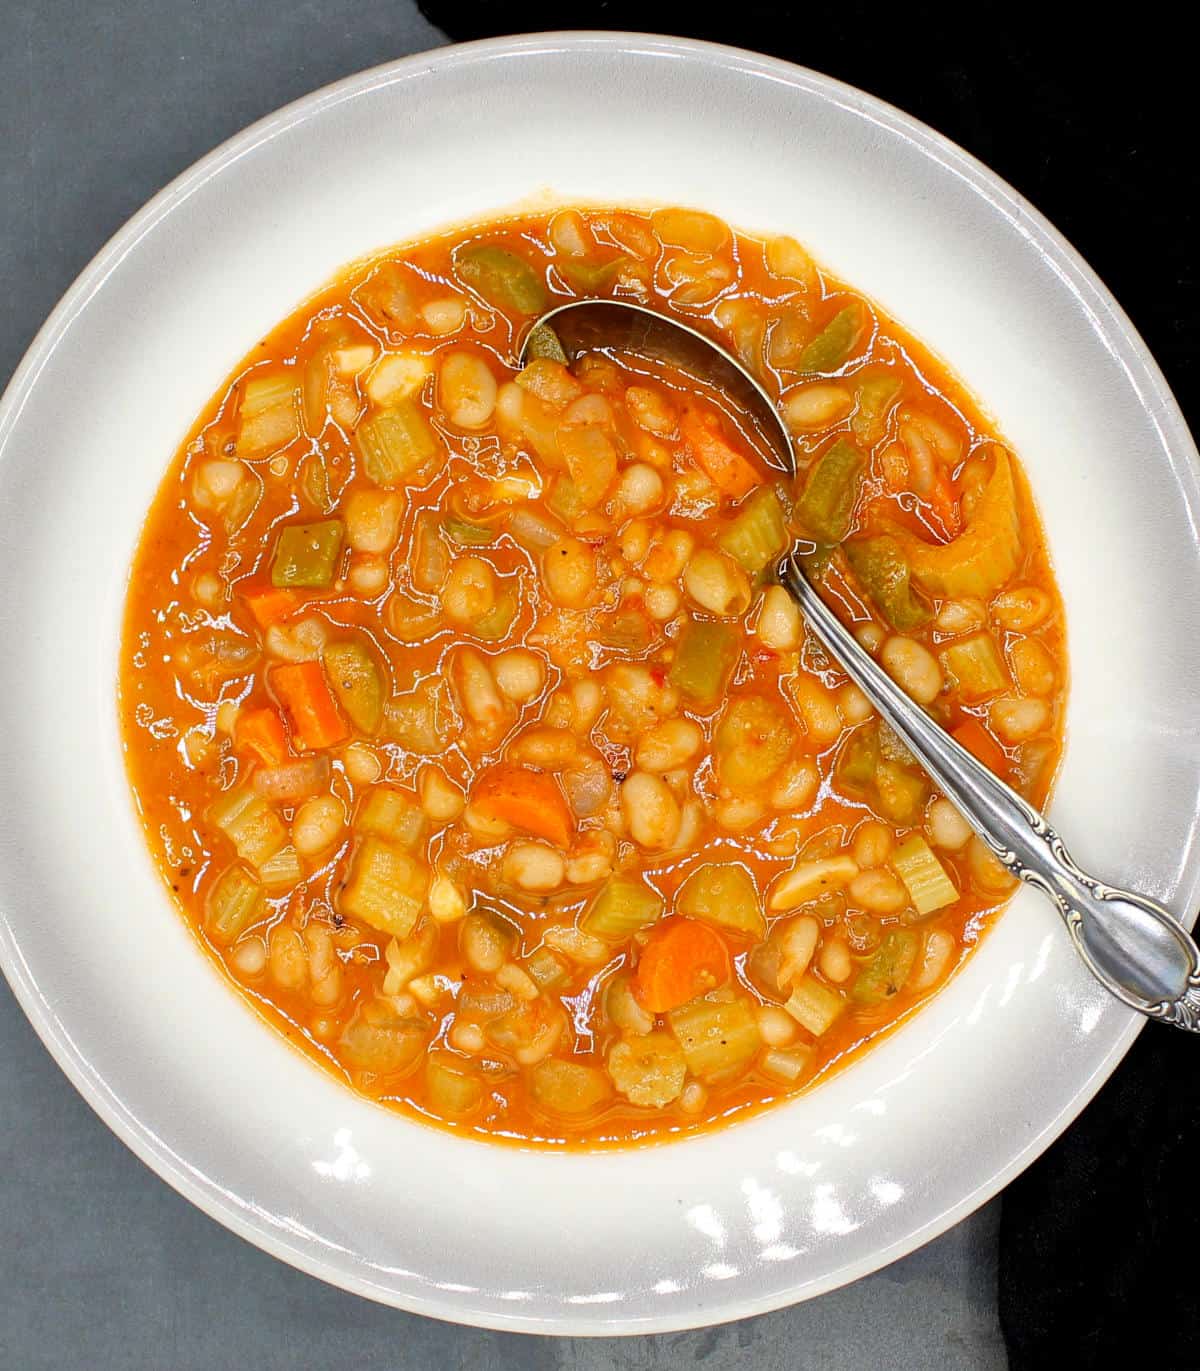 Greek white bean soup fasolada in a bowl with spoon.